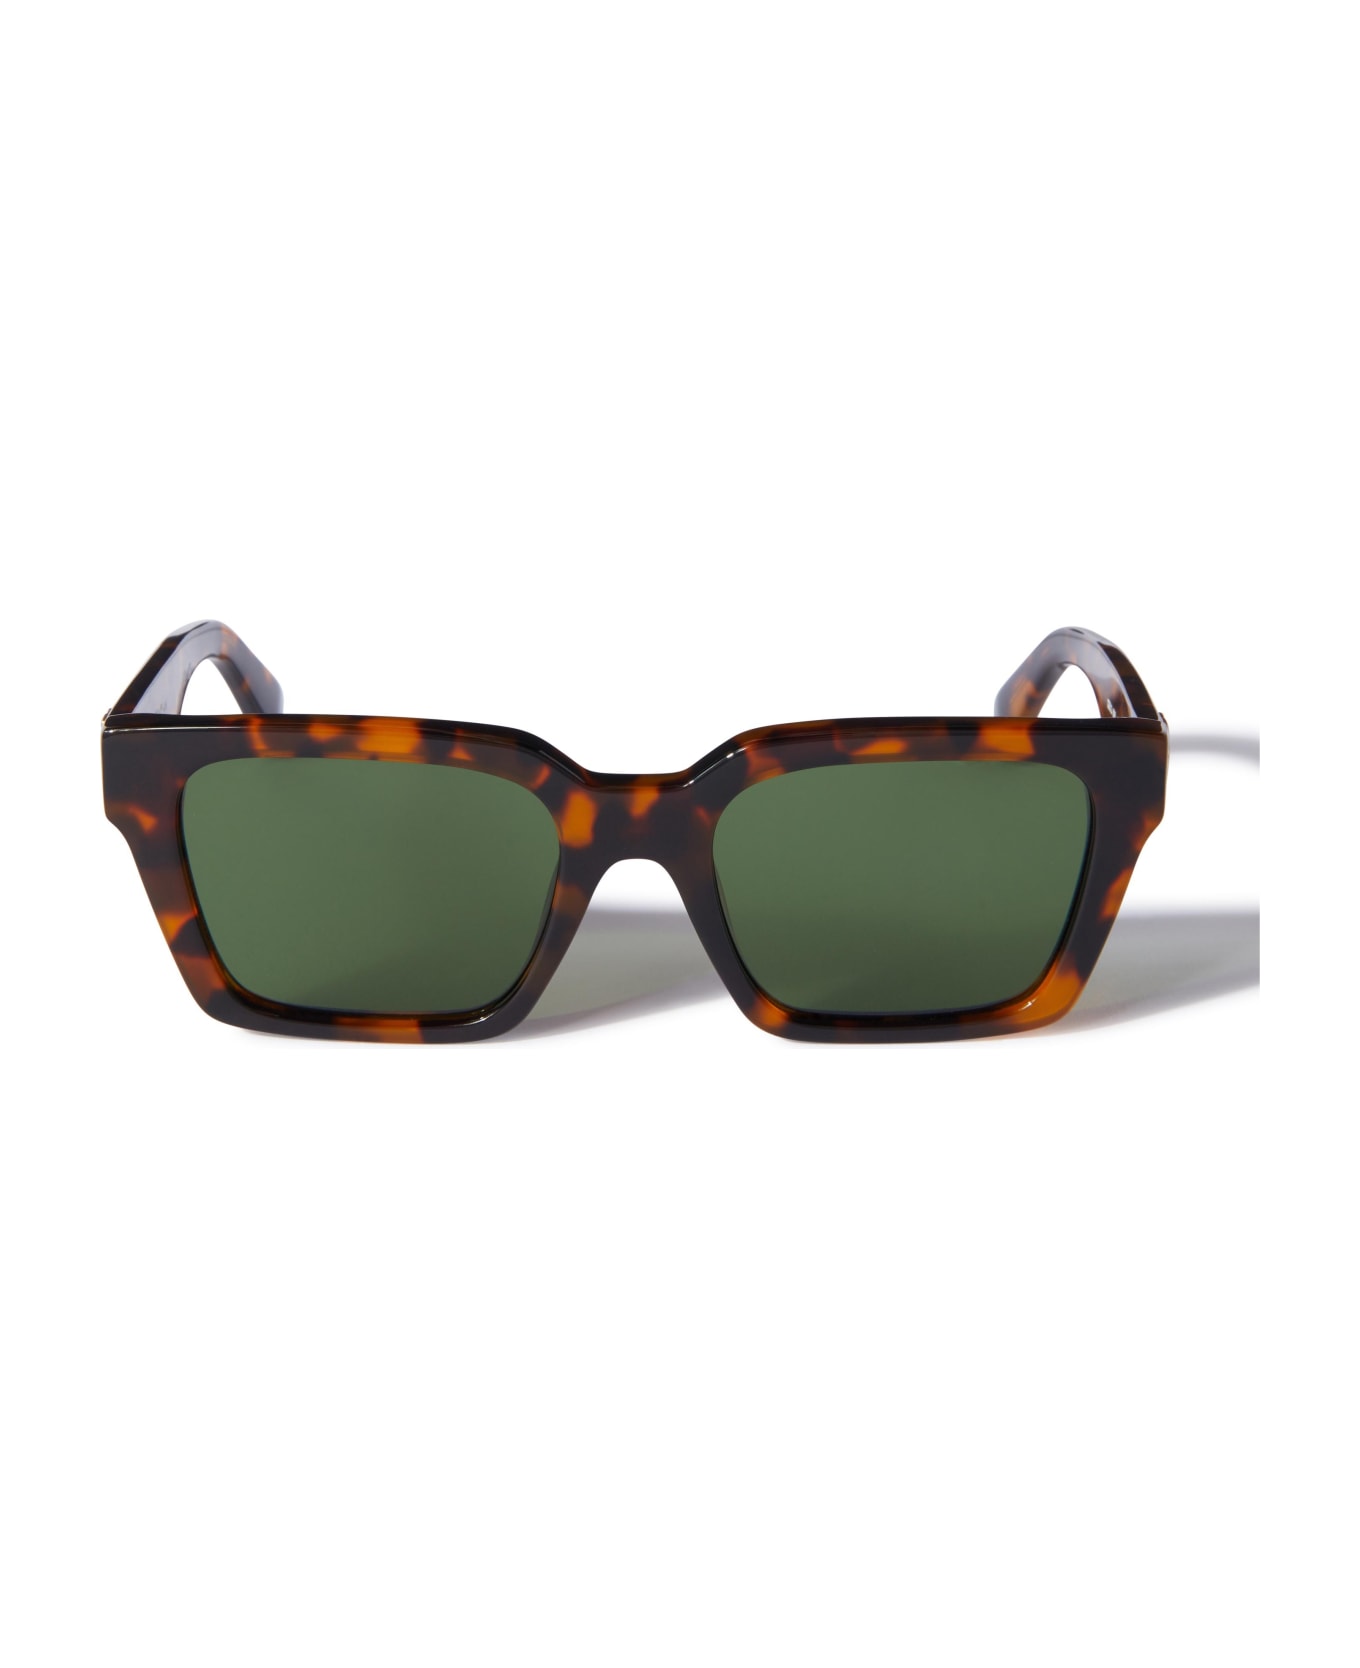 Off-White Sunglasses - Havana/Verde サングラス